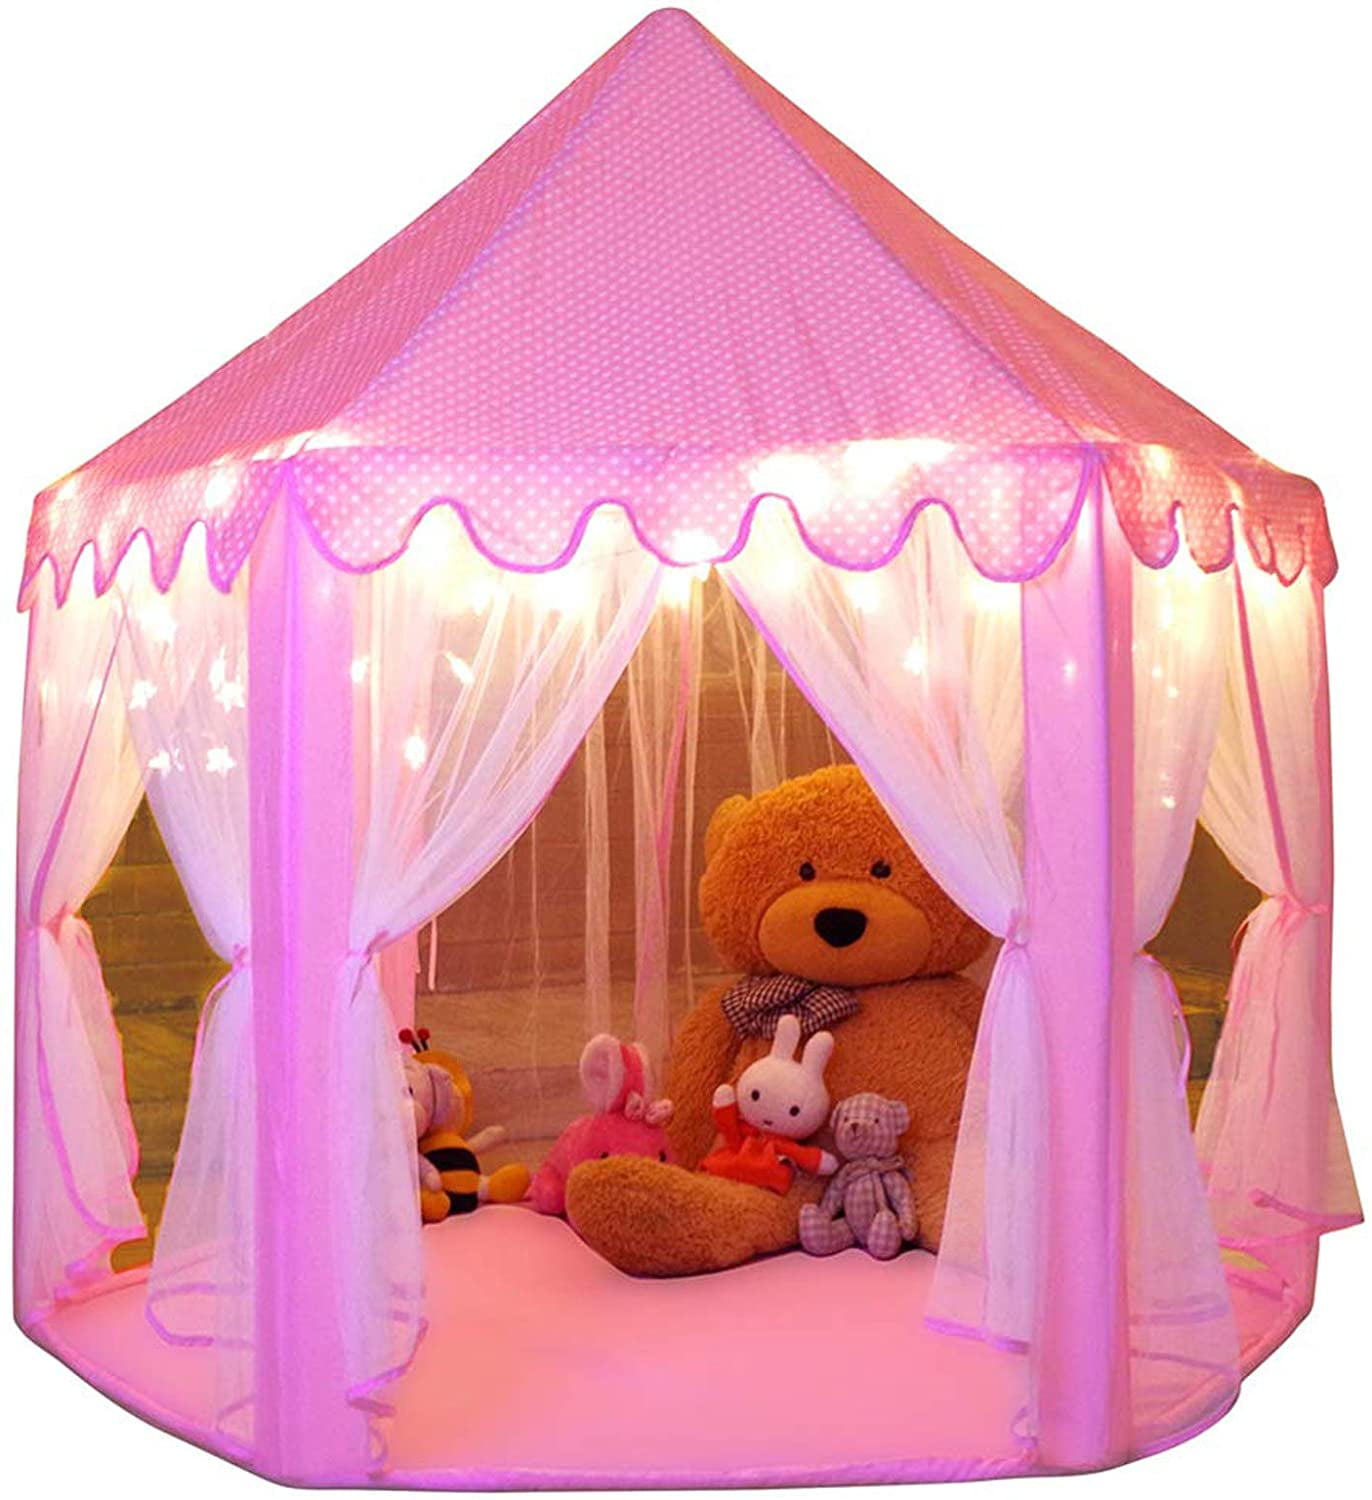 12 Star Lights Princess Castle PlayHouse Outdoor Indoor Kids Girl Play Tent Pink 